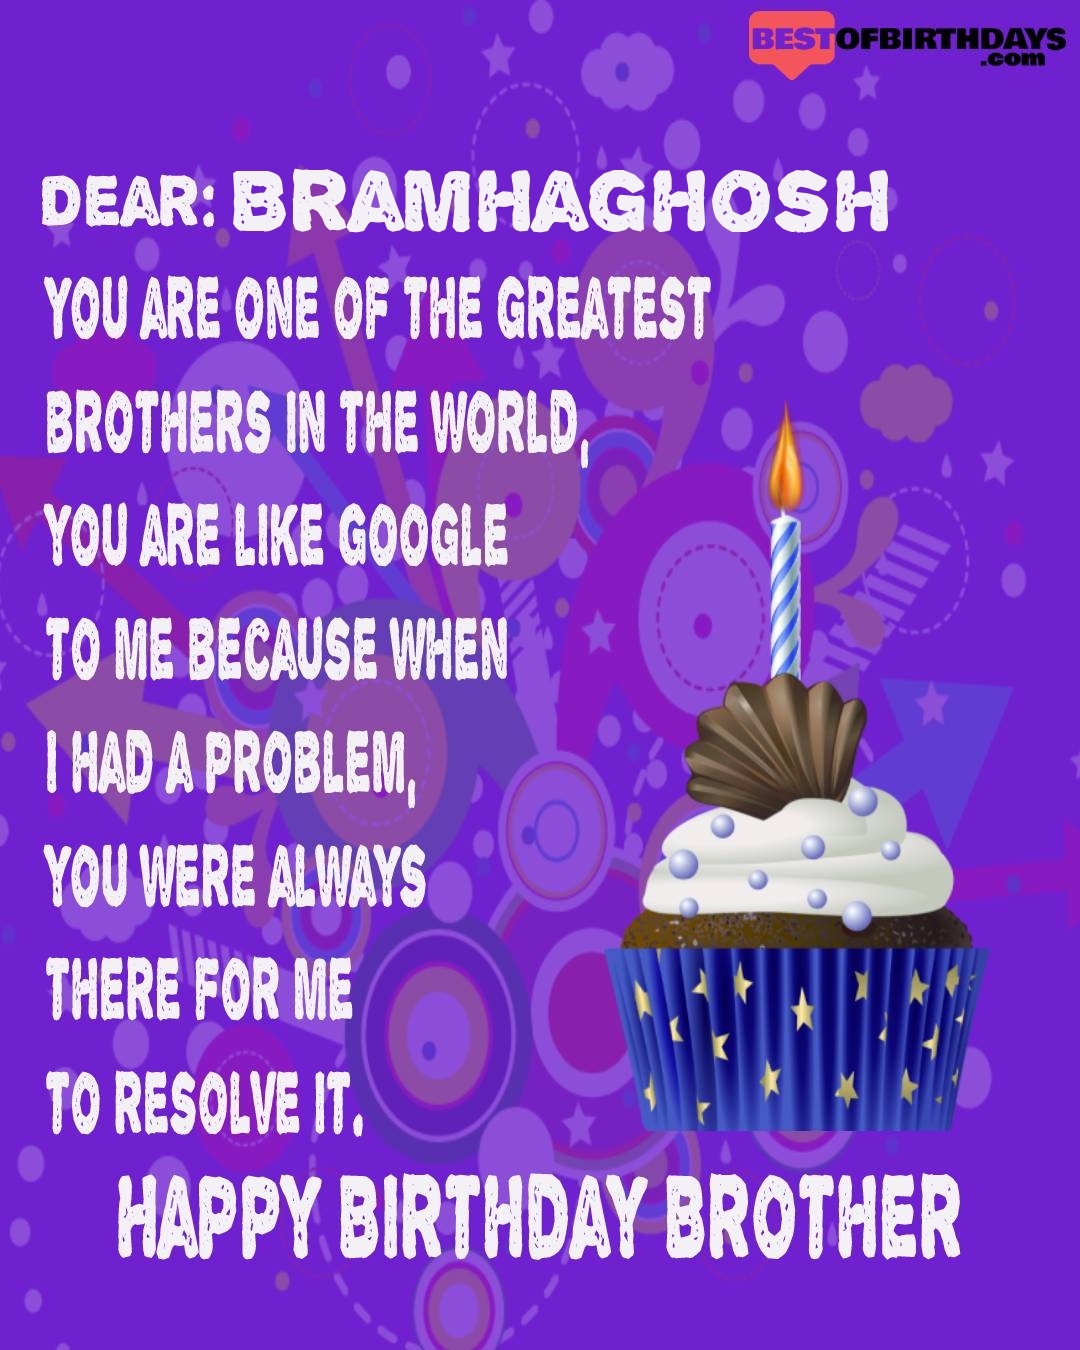 Happy birthday bramhaghosh bhai brother bro